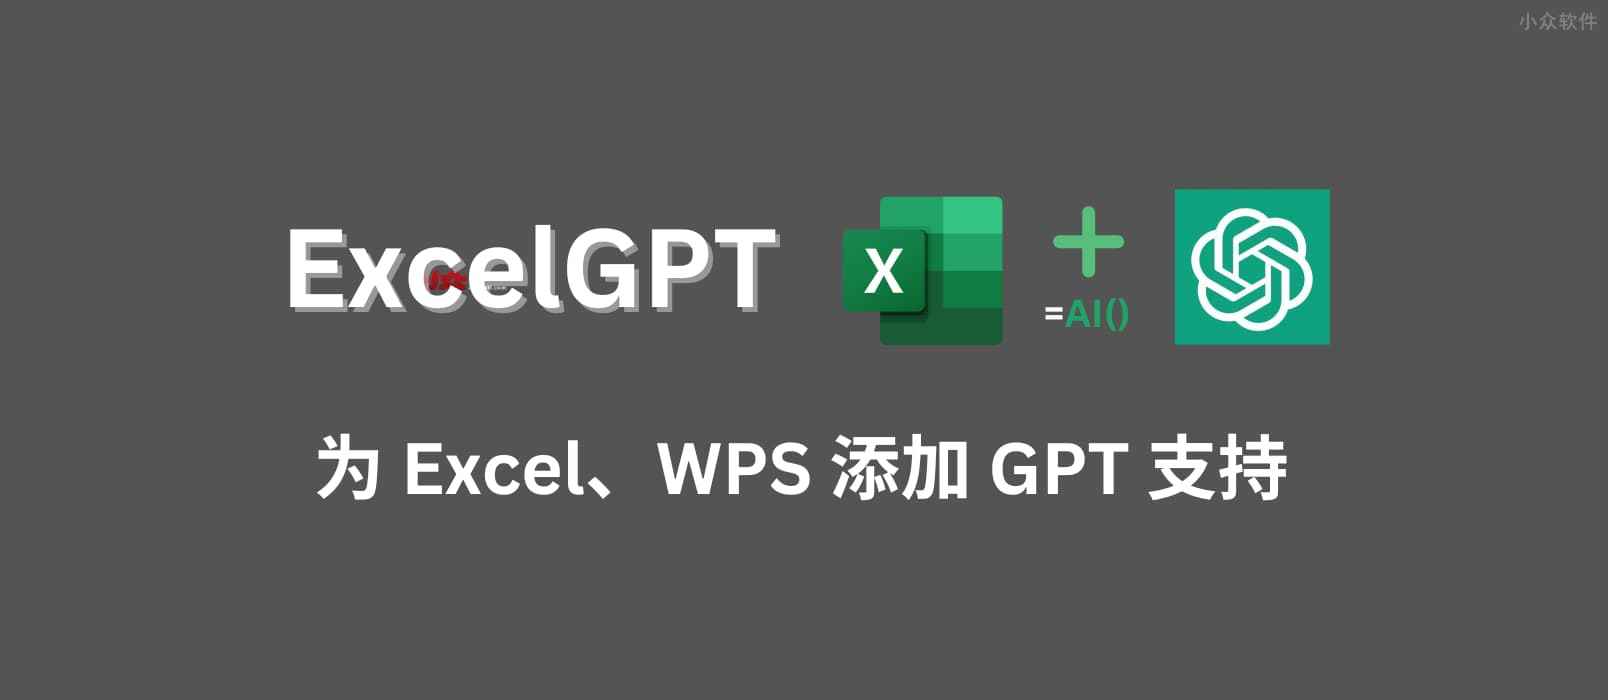 ExcelGPT - 为 Excel、WPS 添加 GPT 支持